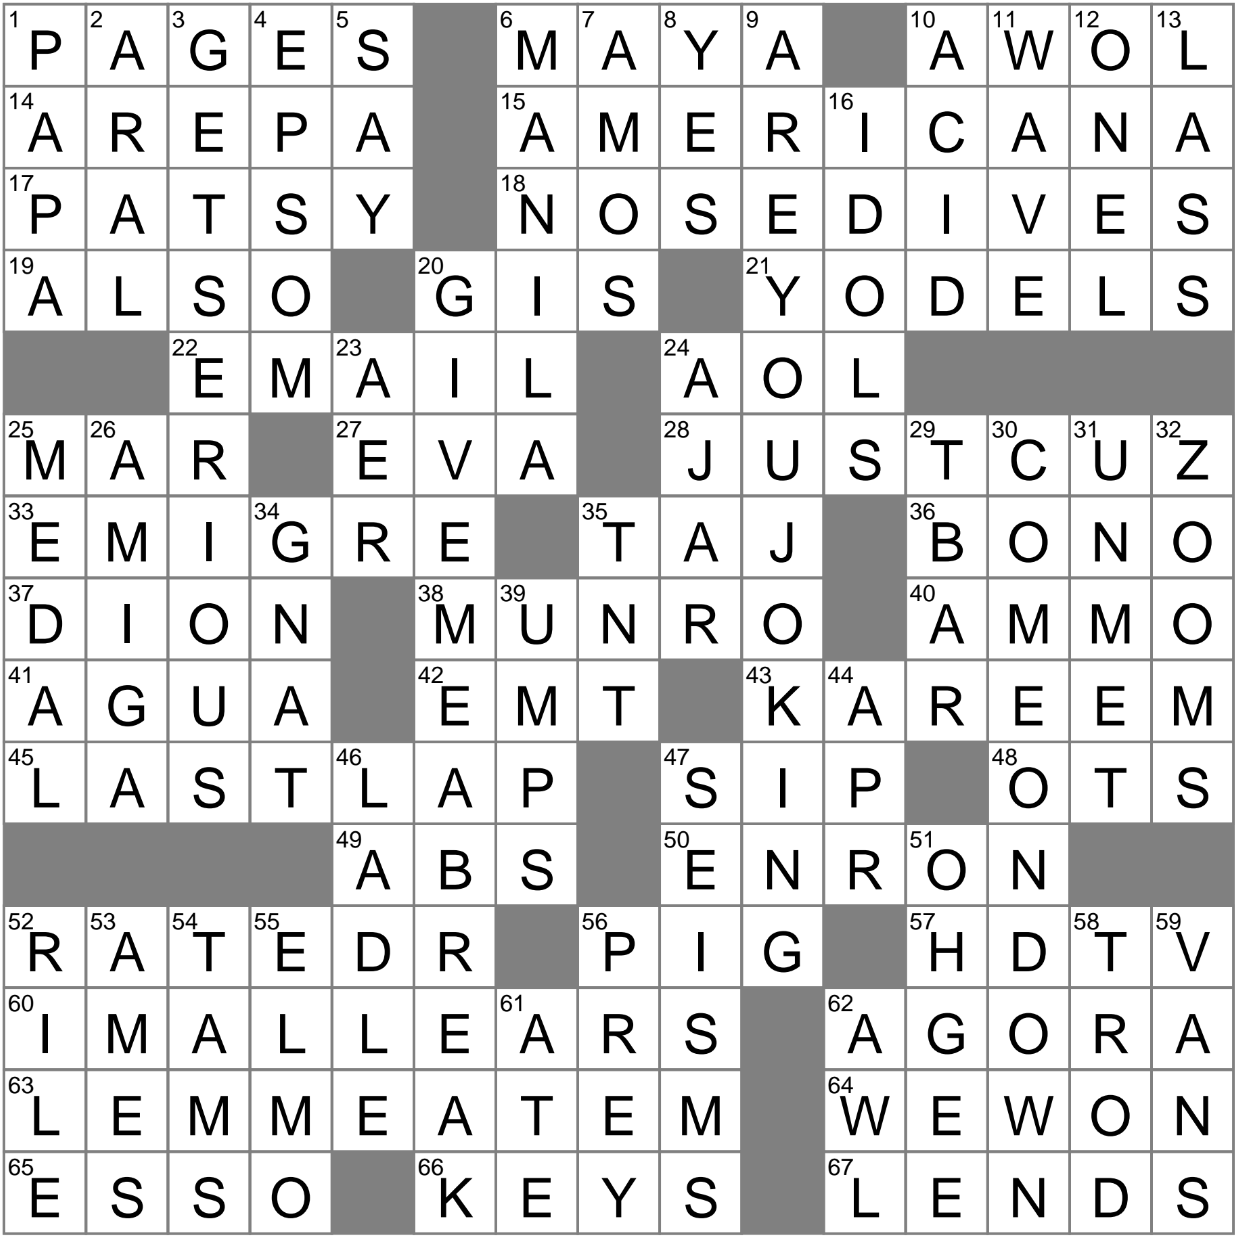 LA Times Crossword 6 Apr 23 Thursday LAXCrossword com